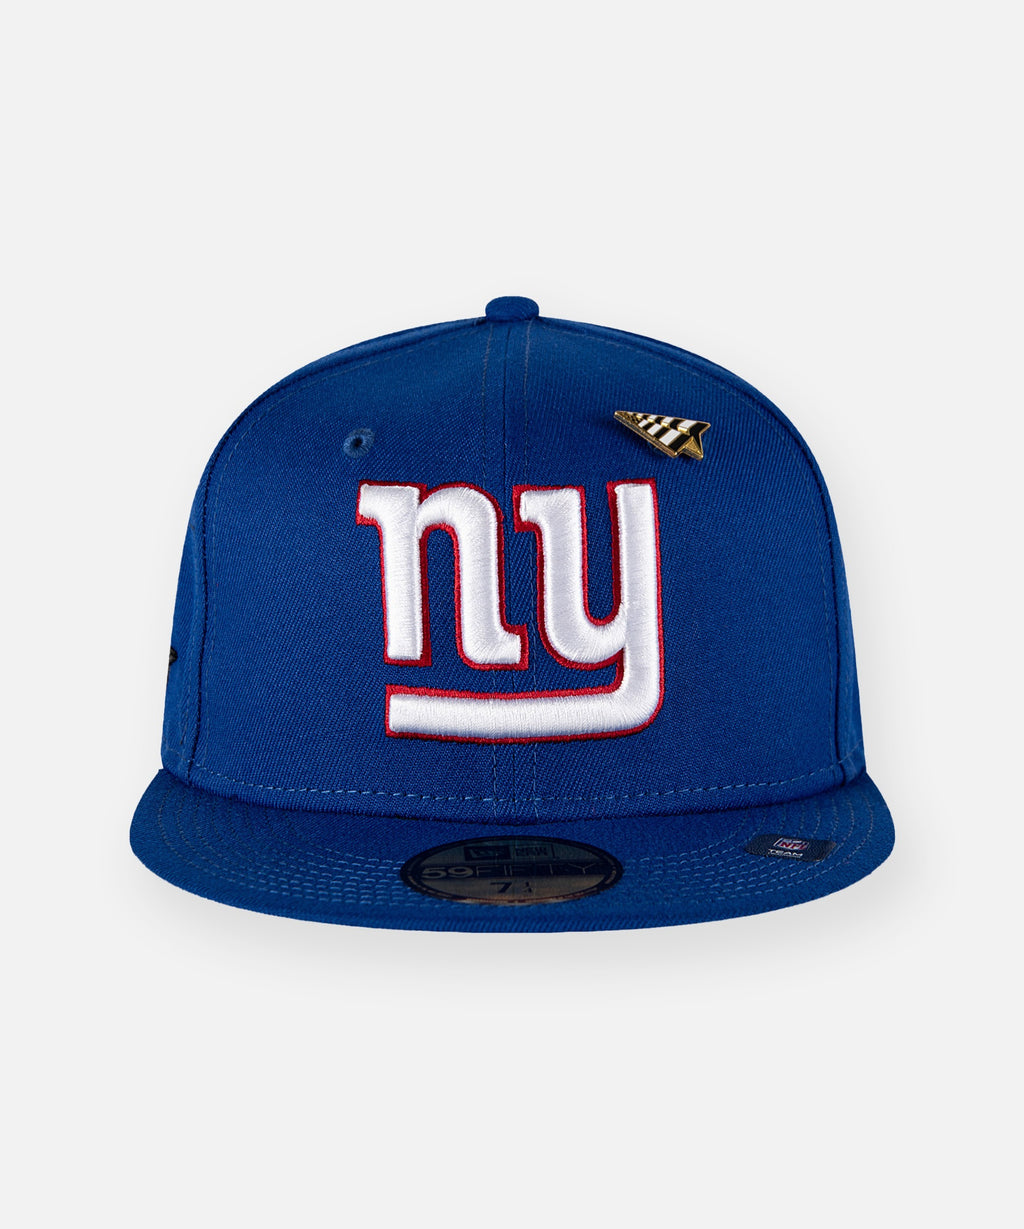 New York Giants Hats in New York Giants Team Shop 